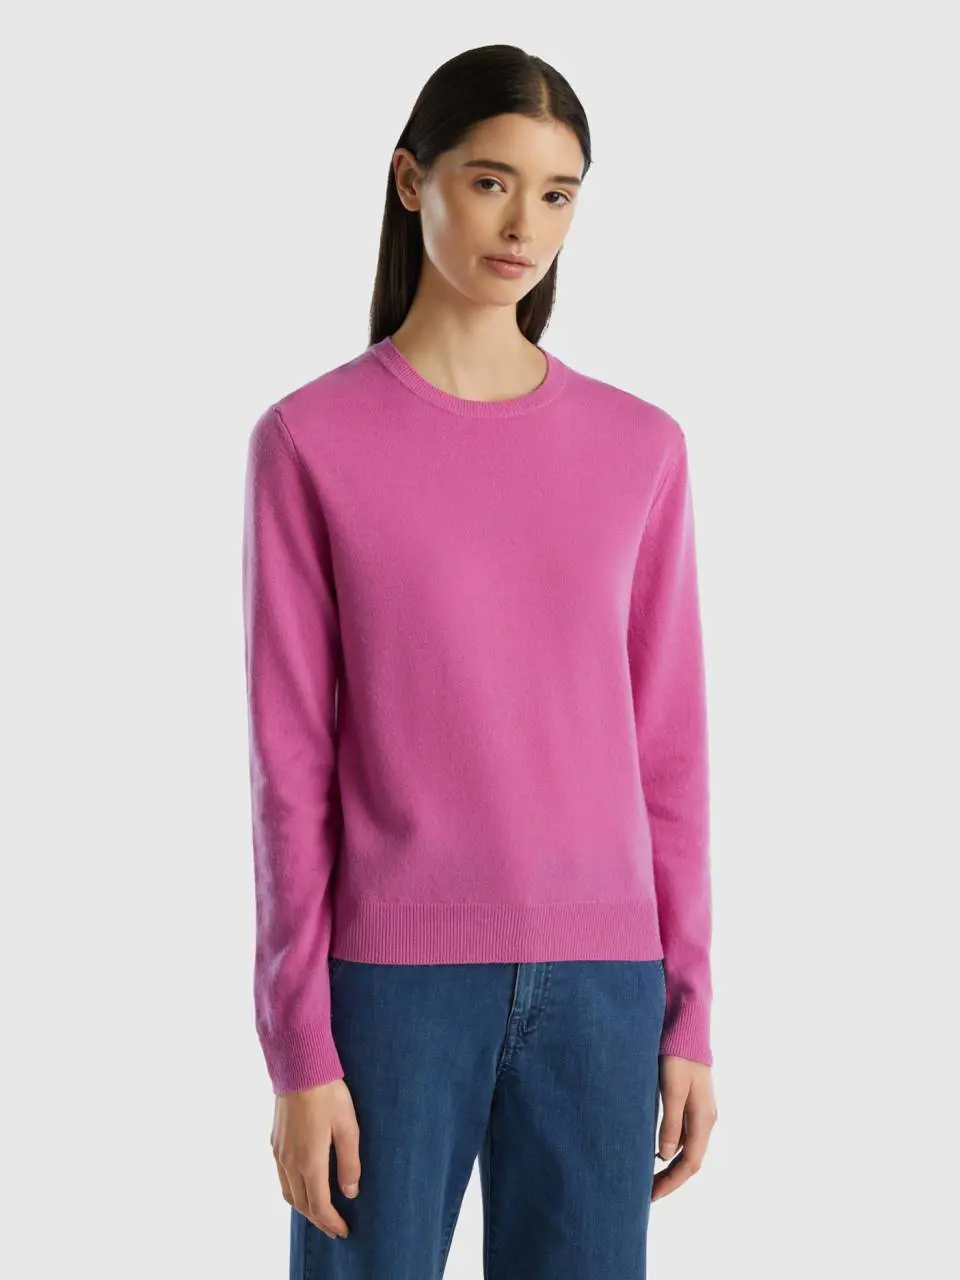 Benetton dark pink crew neck sweater in merino wool. 1